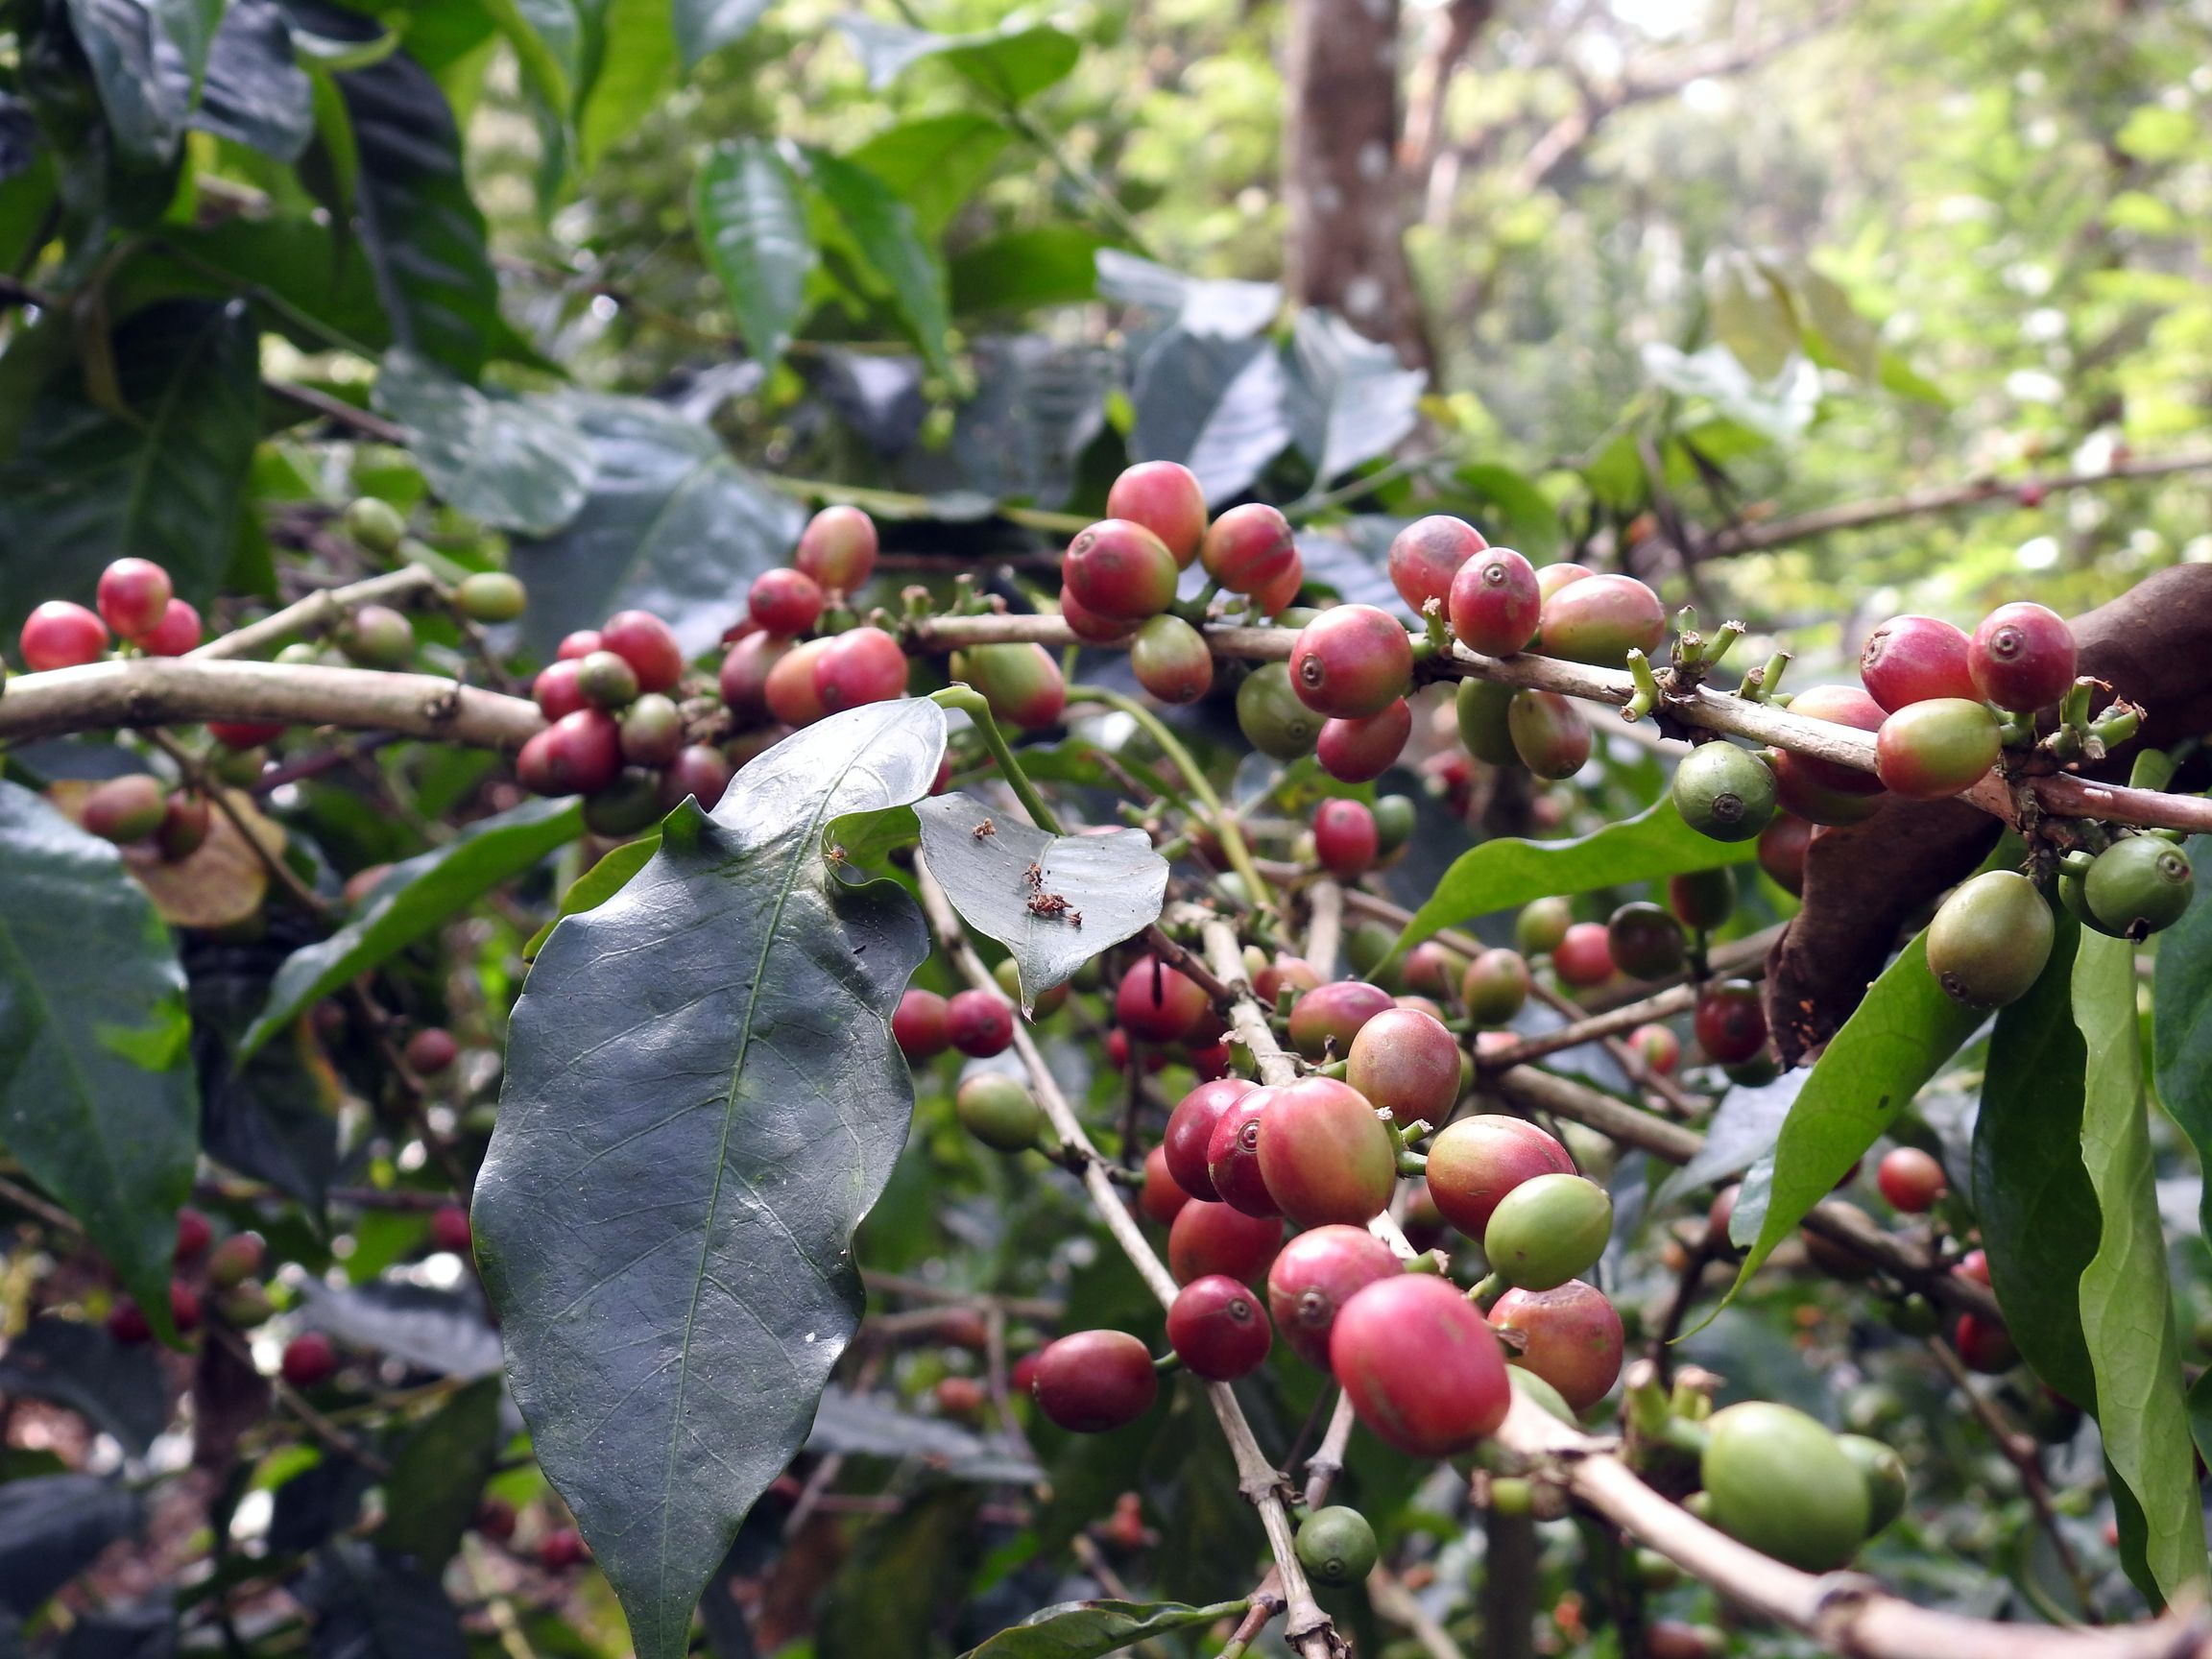 Coffee Beans on a coffee shrub